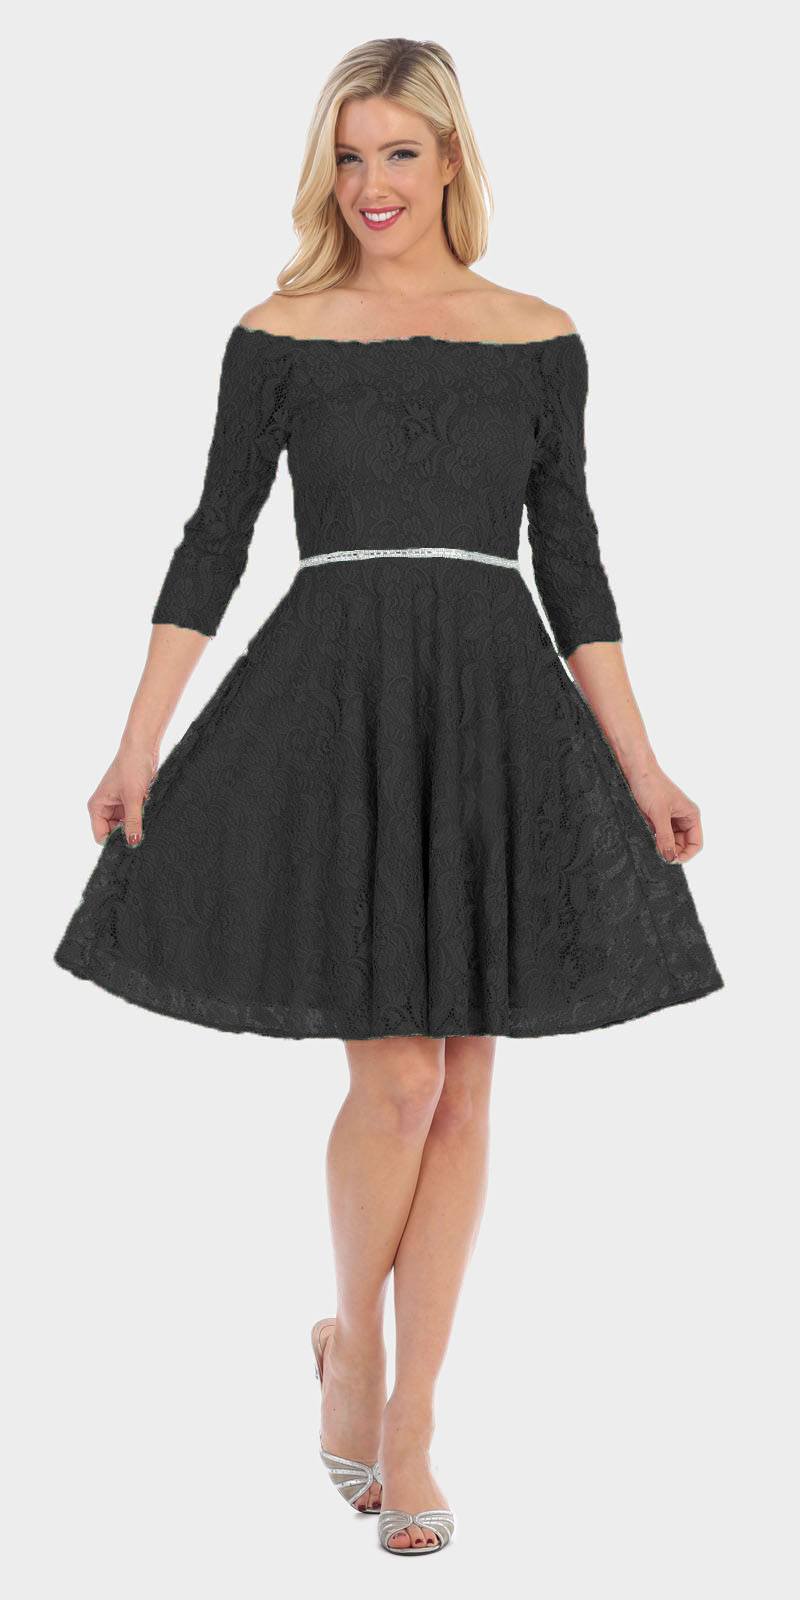 Celavie 6343 Off-the-Shoulder Short Lace Homecoming Dress Black